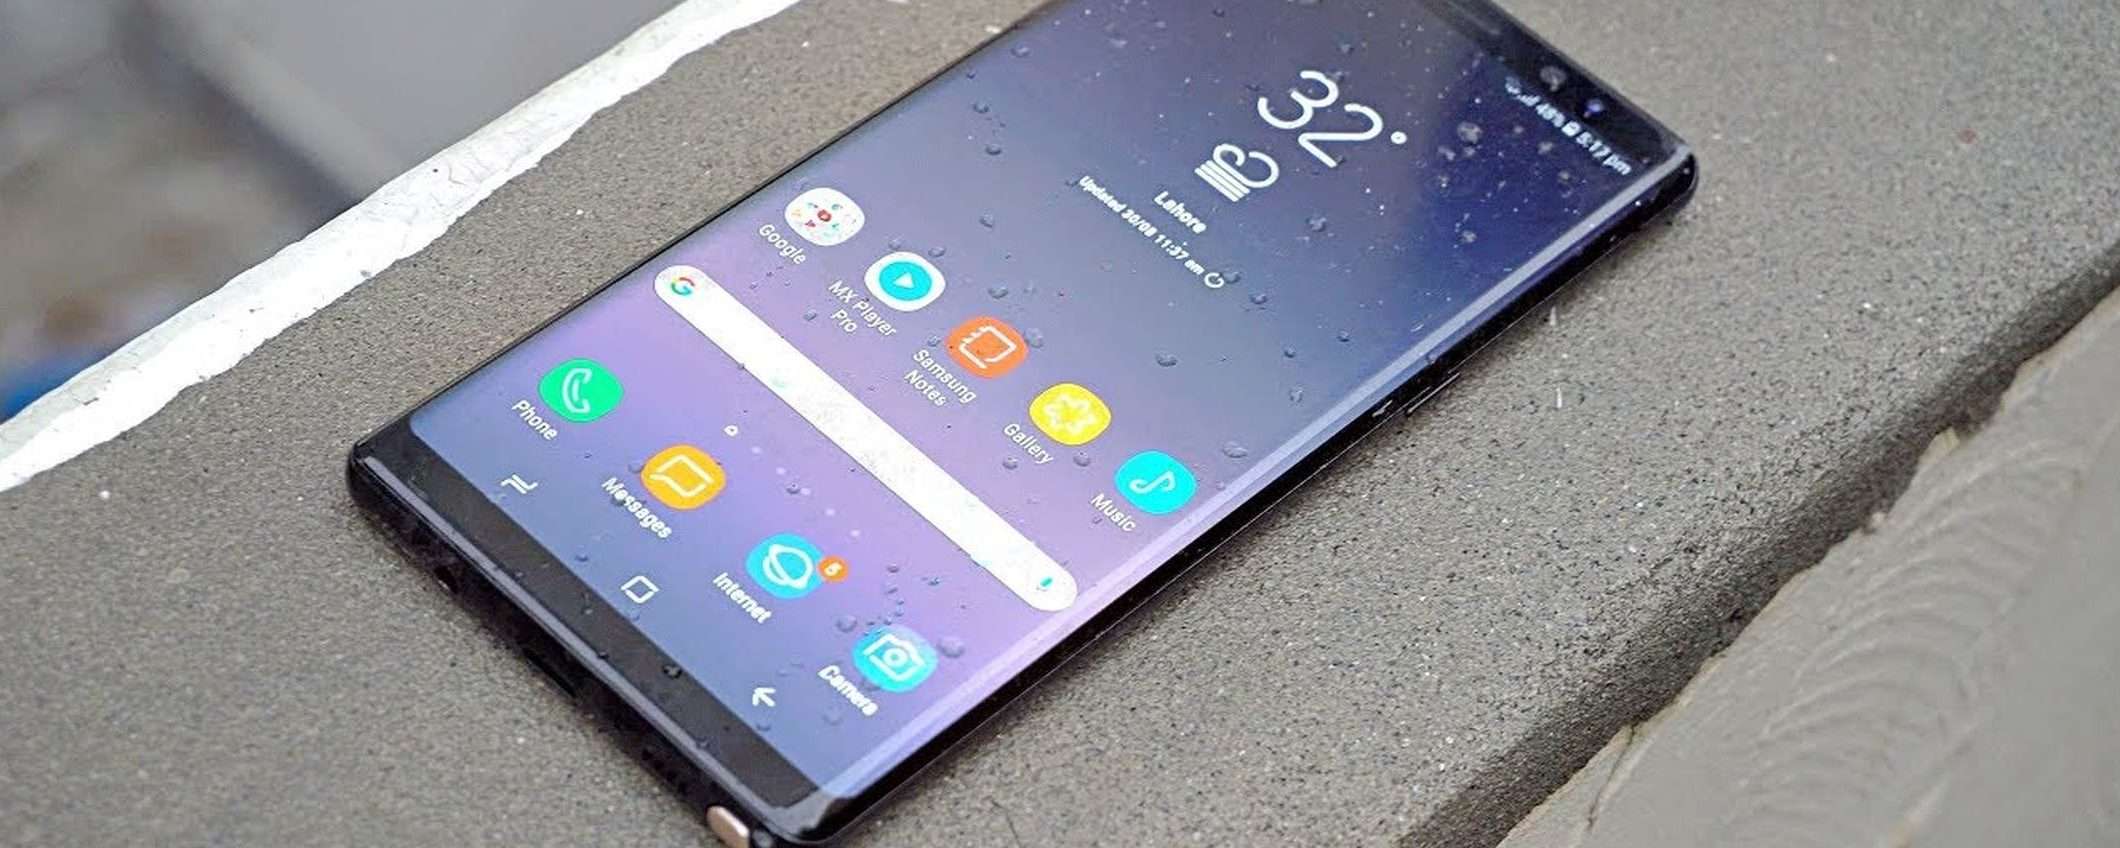 Samsung multata per pubblicità ingannevole